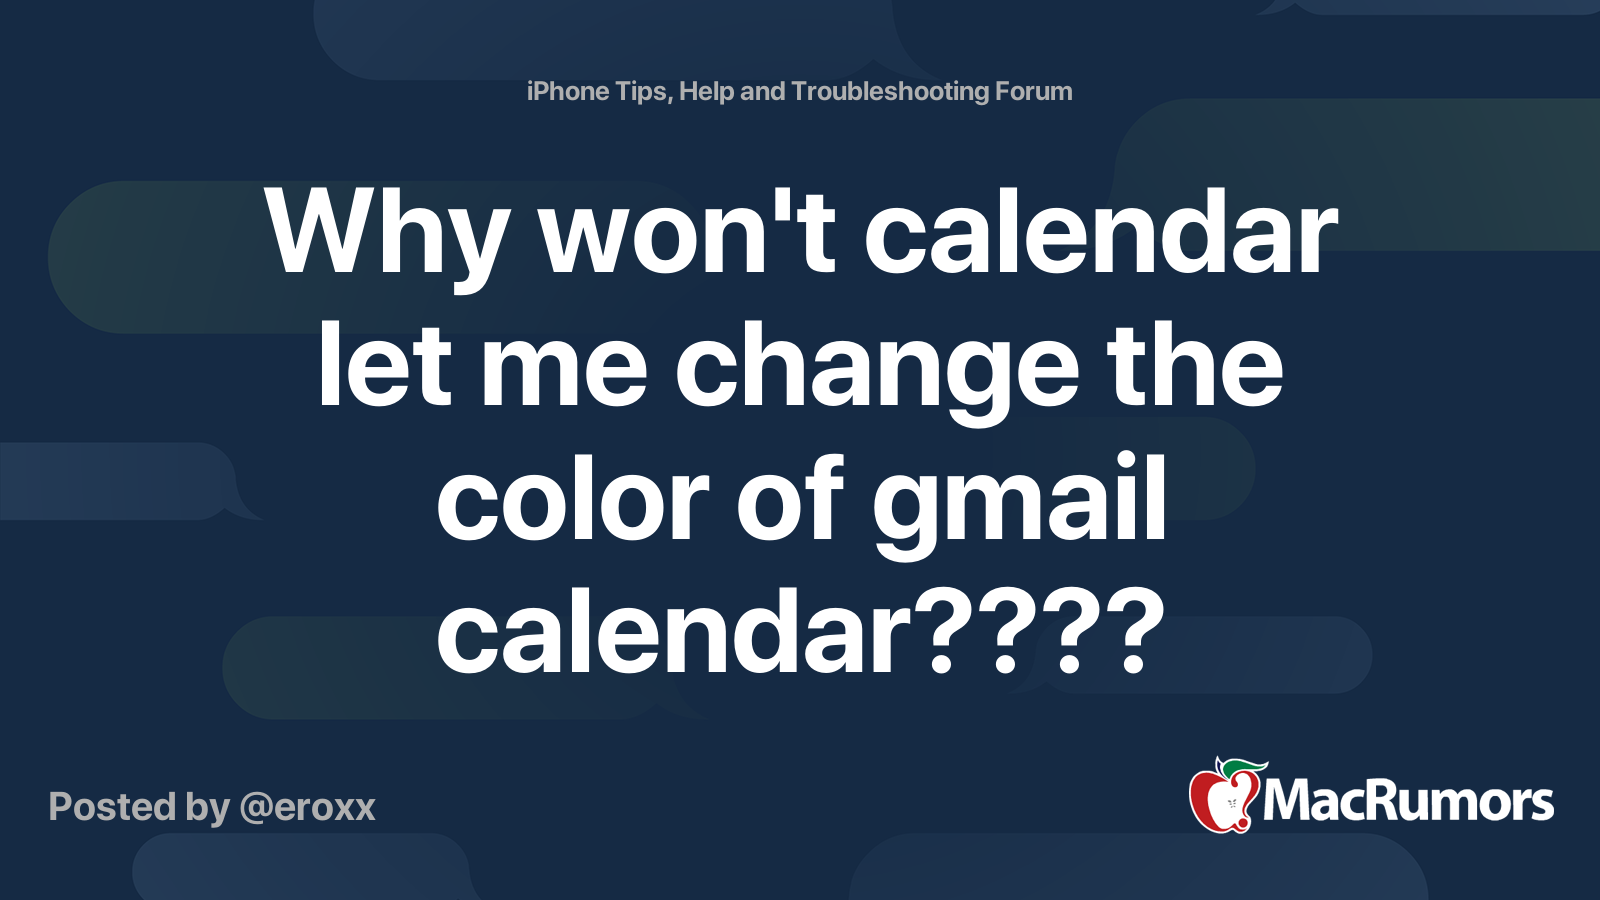 Why won't calendar let me change the color of gmail calendar